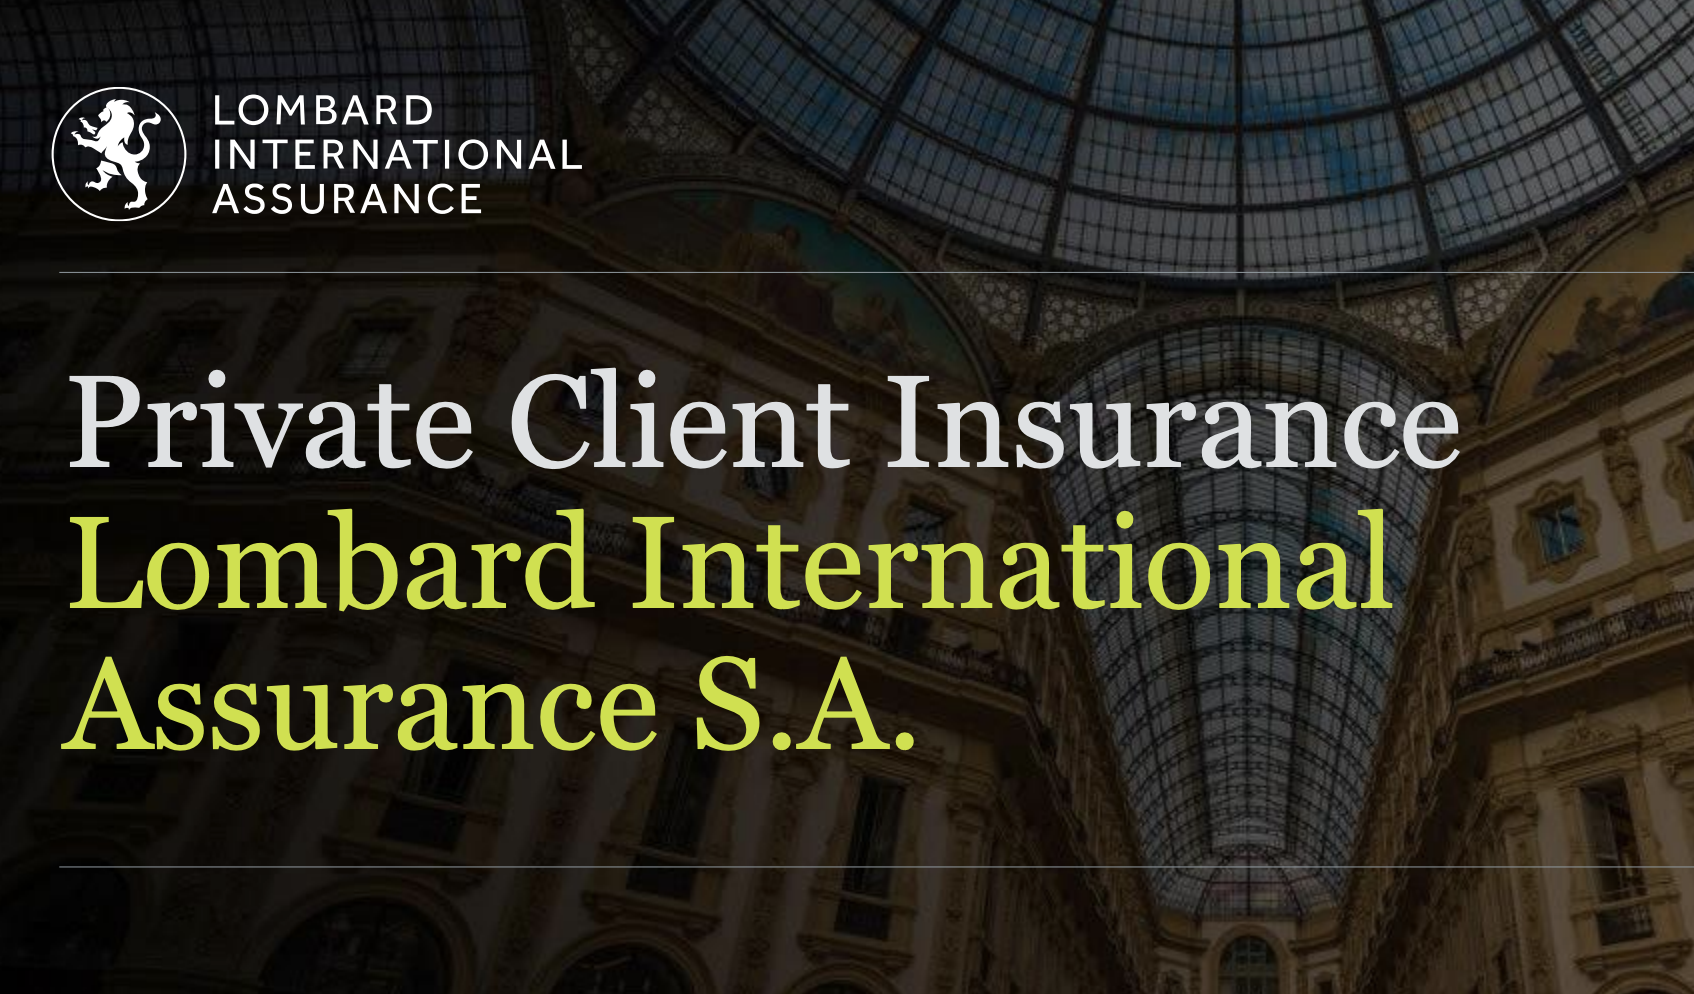 LOMBARD INTERNATIONAL ASSURANCE
Private Client Insurance di Diritto Lussemburghese